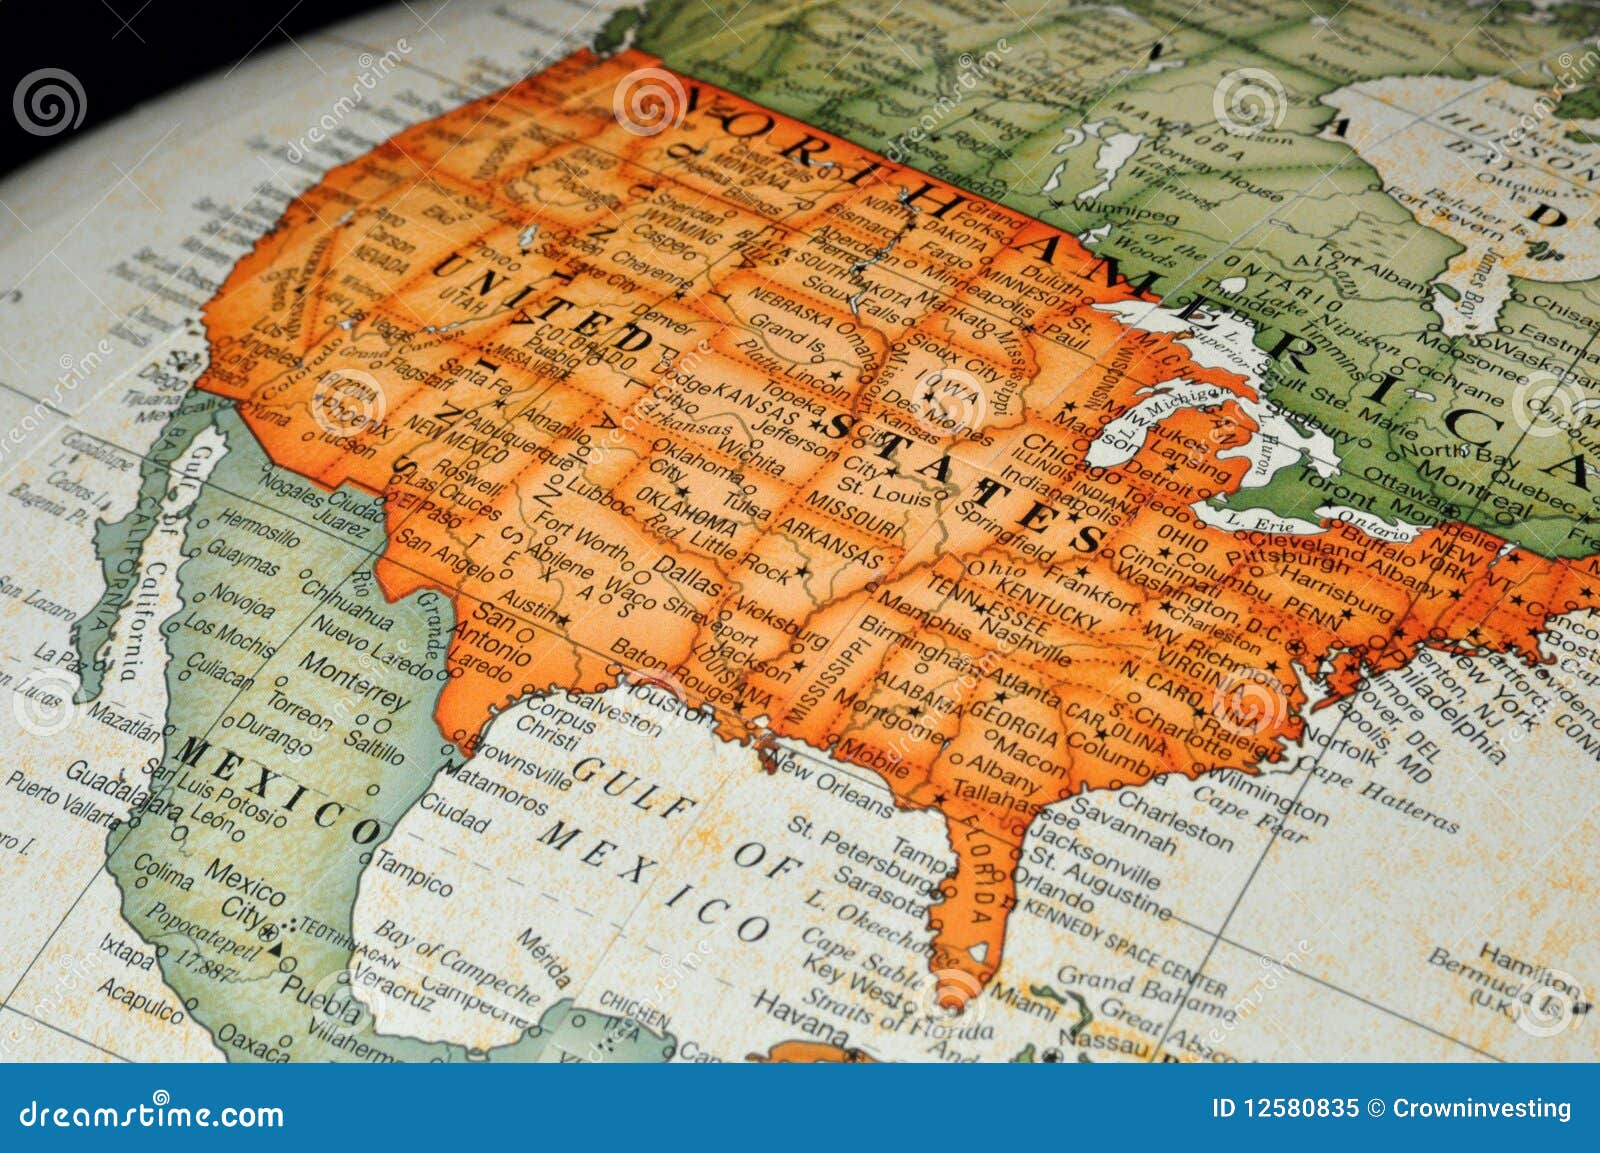 Globe Or Map Of United States Royalty Free Stock Photo - Image: 12580835